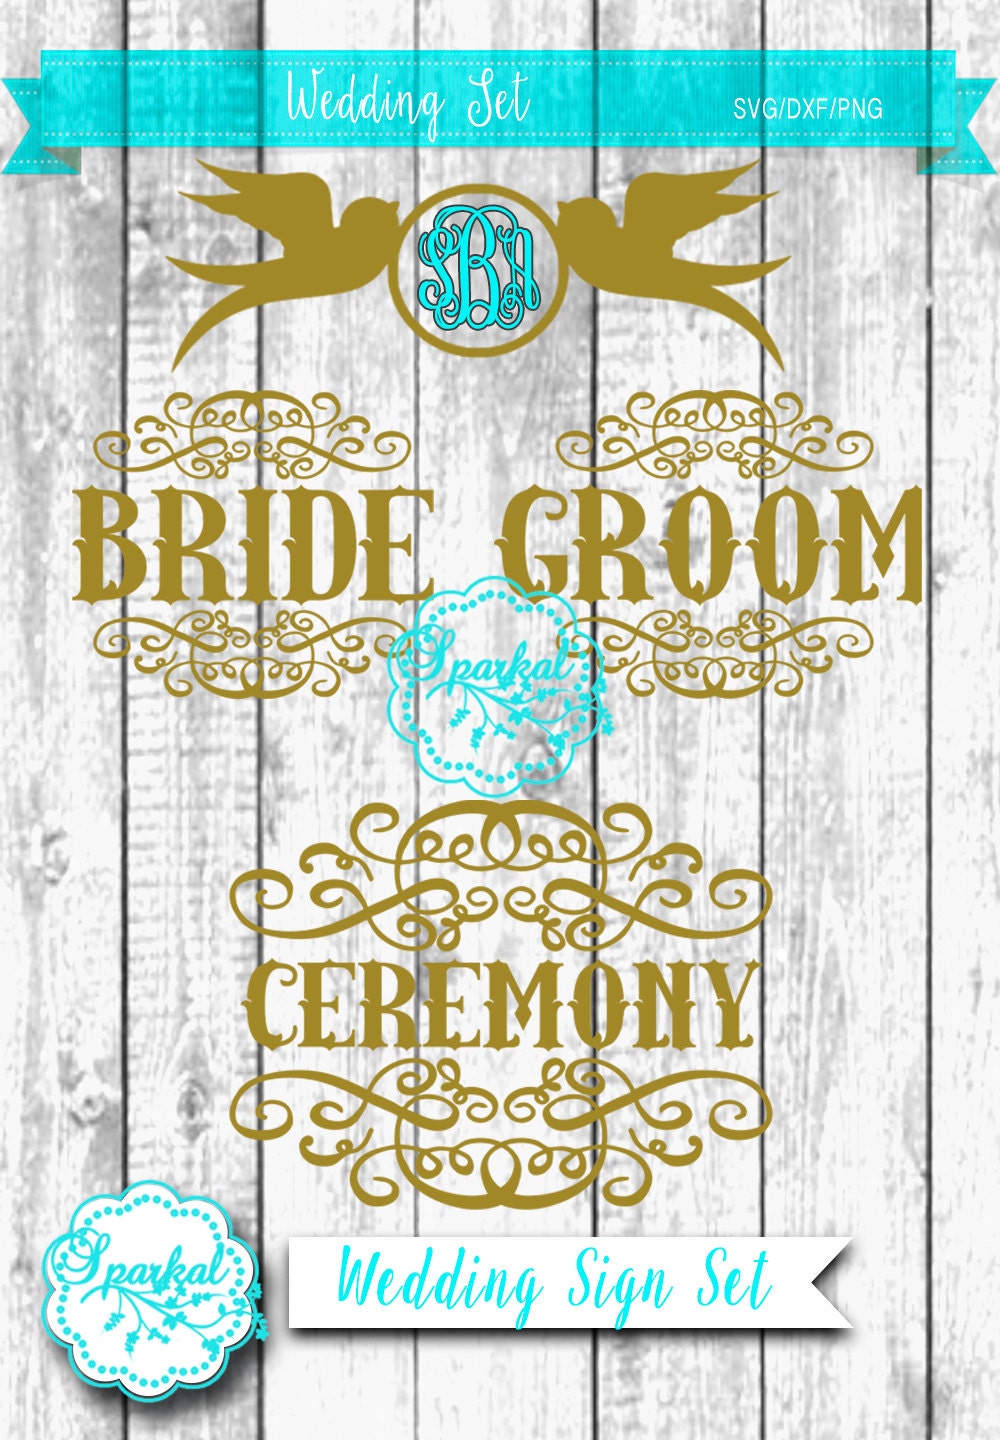 Wedding Day Flourishes SVG Cutting files Bride Groom